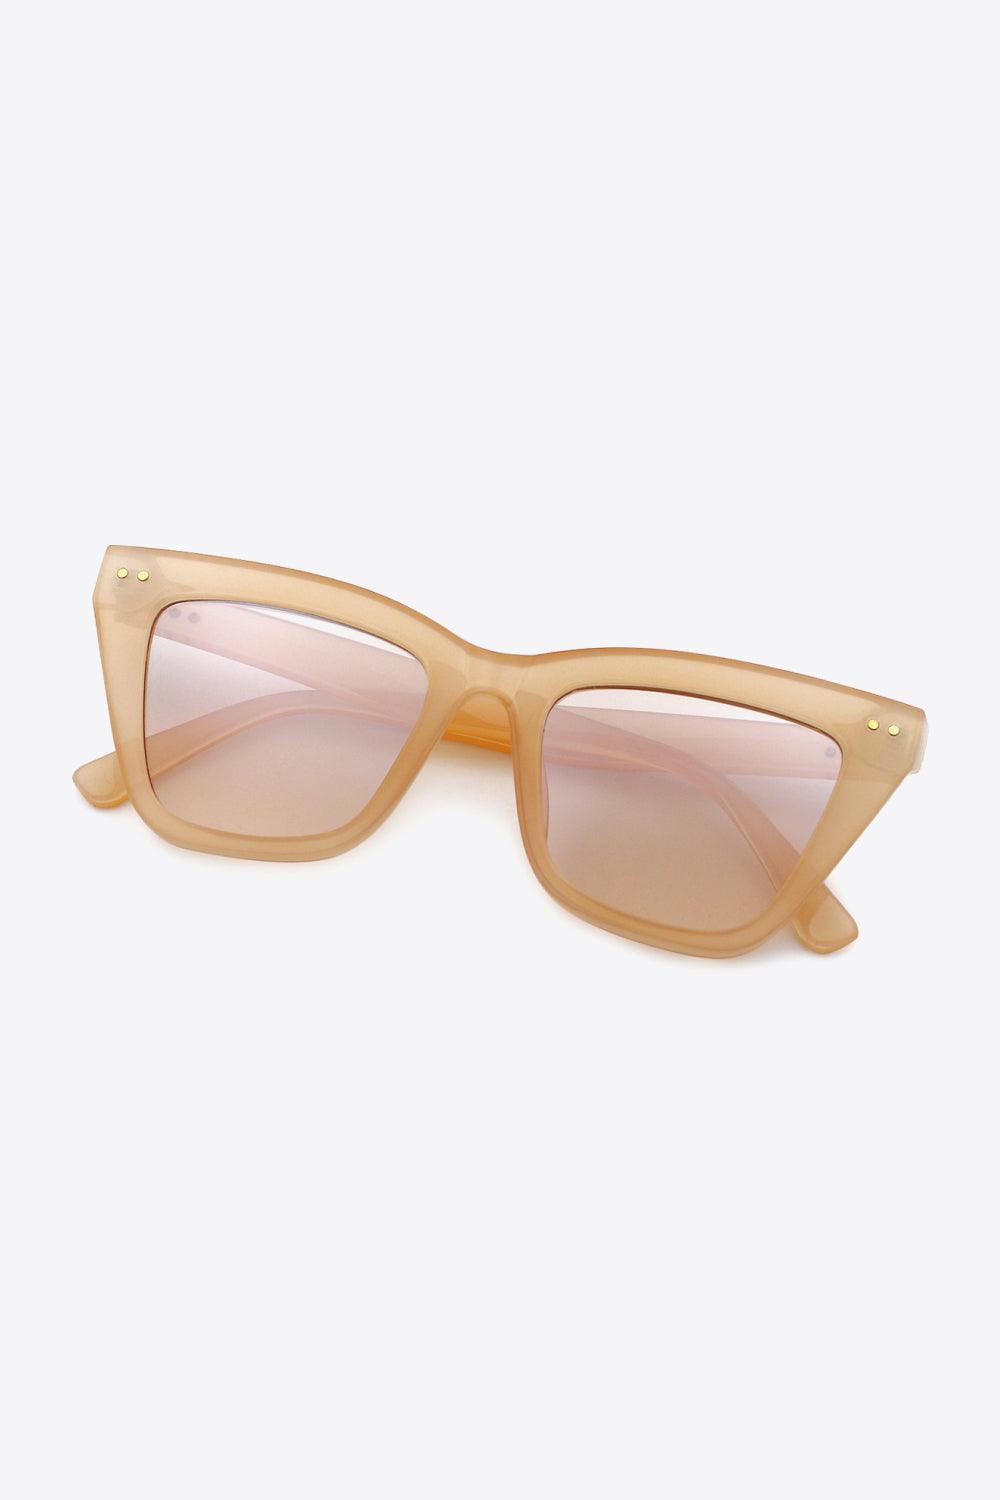 UV400 Polycarbonate Frame Sunglasses-Trendsi-Light Apricot-One Size-Très Elite